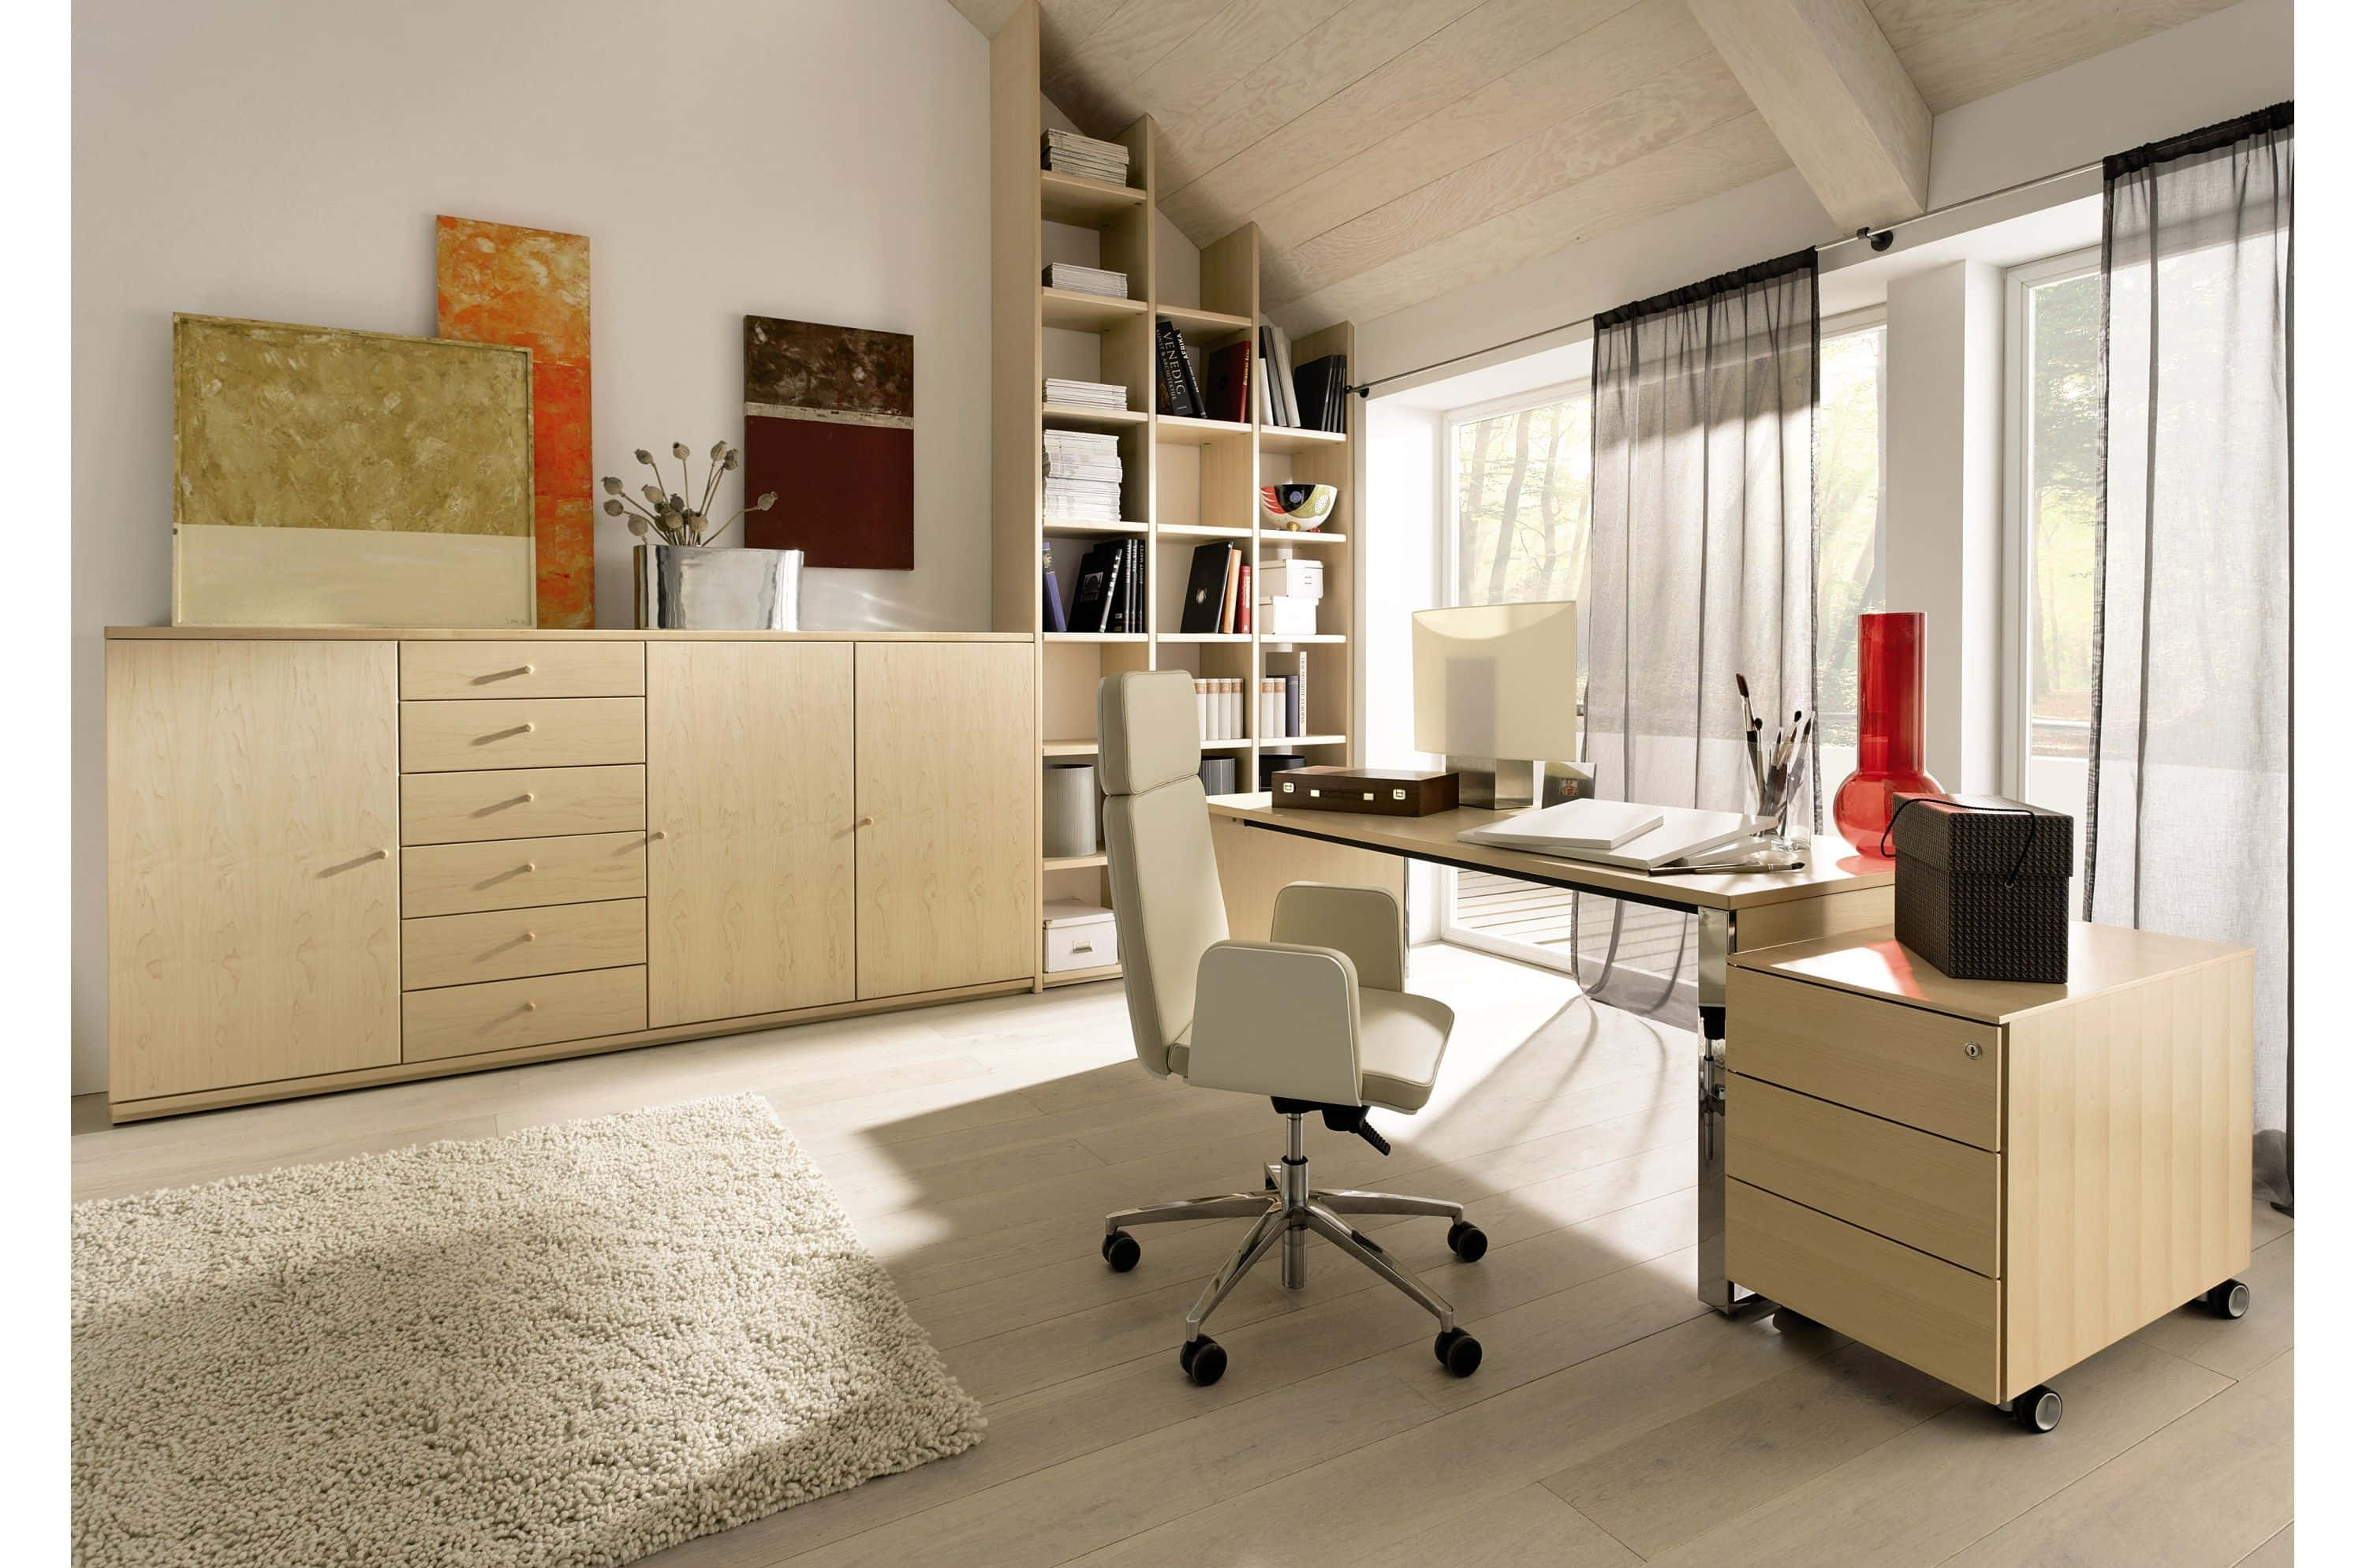 Invigorating Workspace - An Elegant Office Background